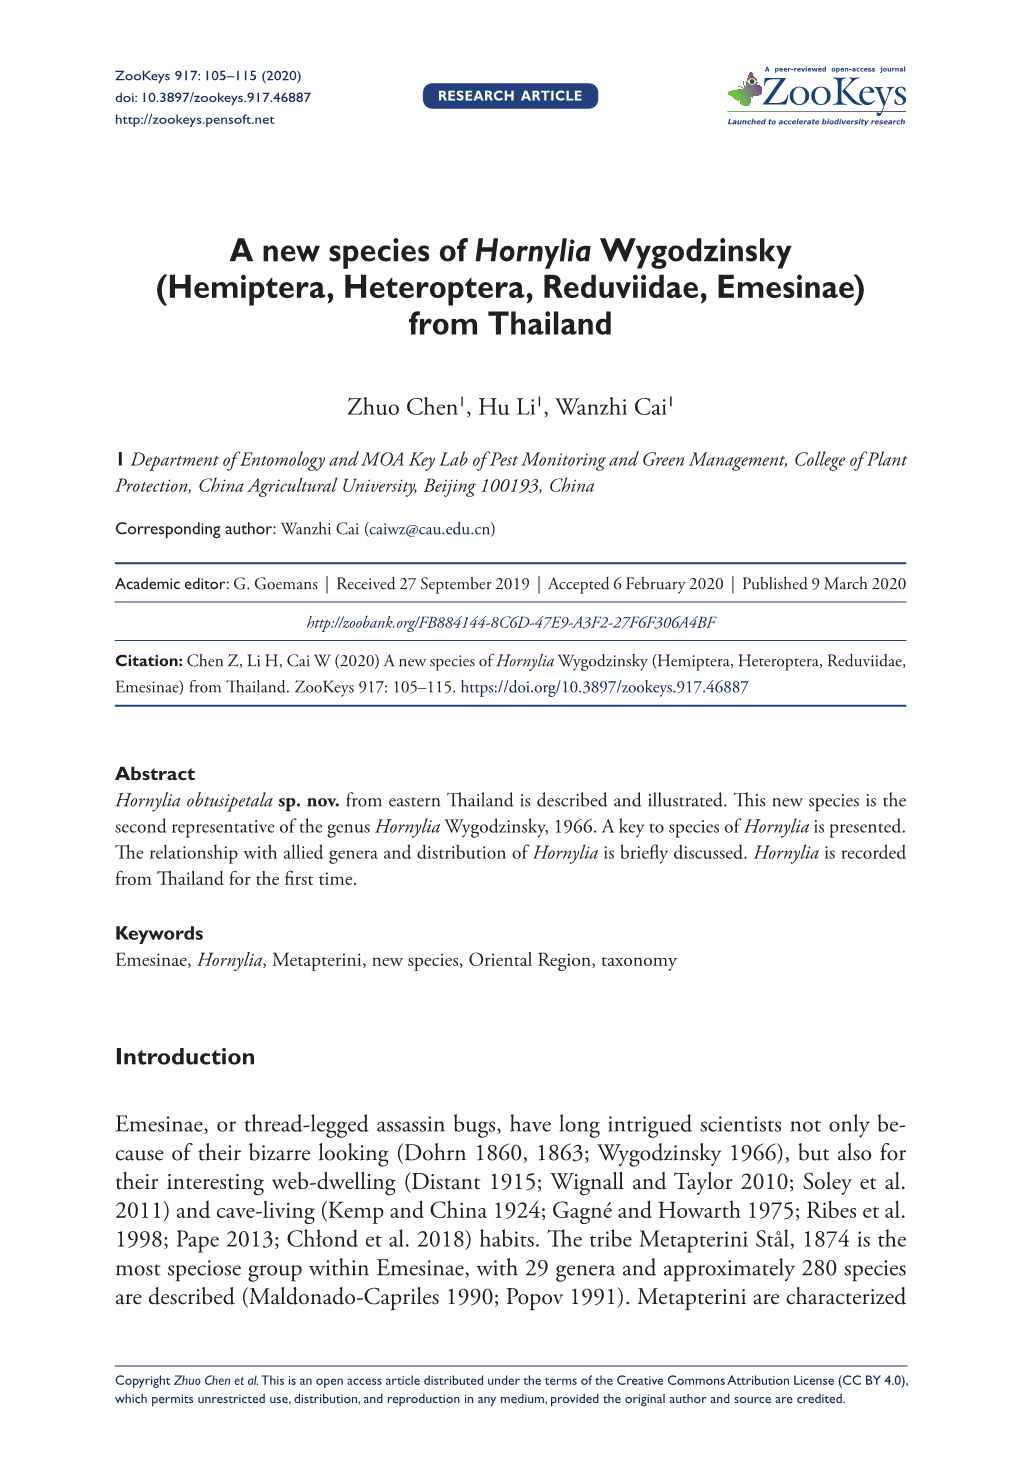 A New Species of Hornylia Wygodzinsky (Hemiptera, Heteroptera, Reduviidae, Emesinae) from Thailand